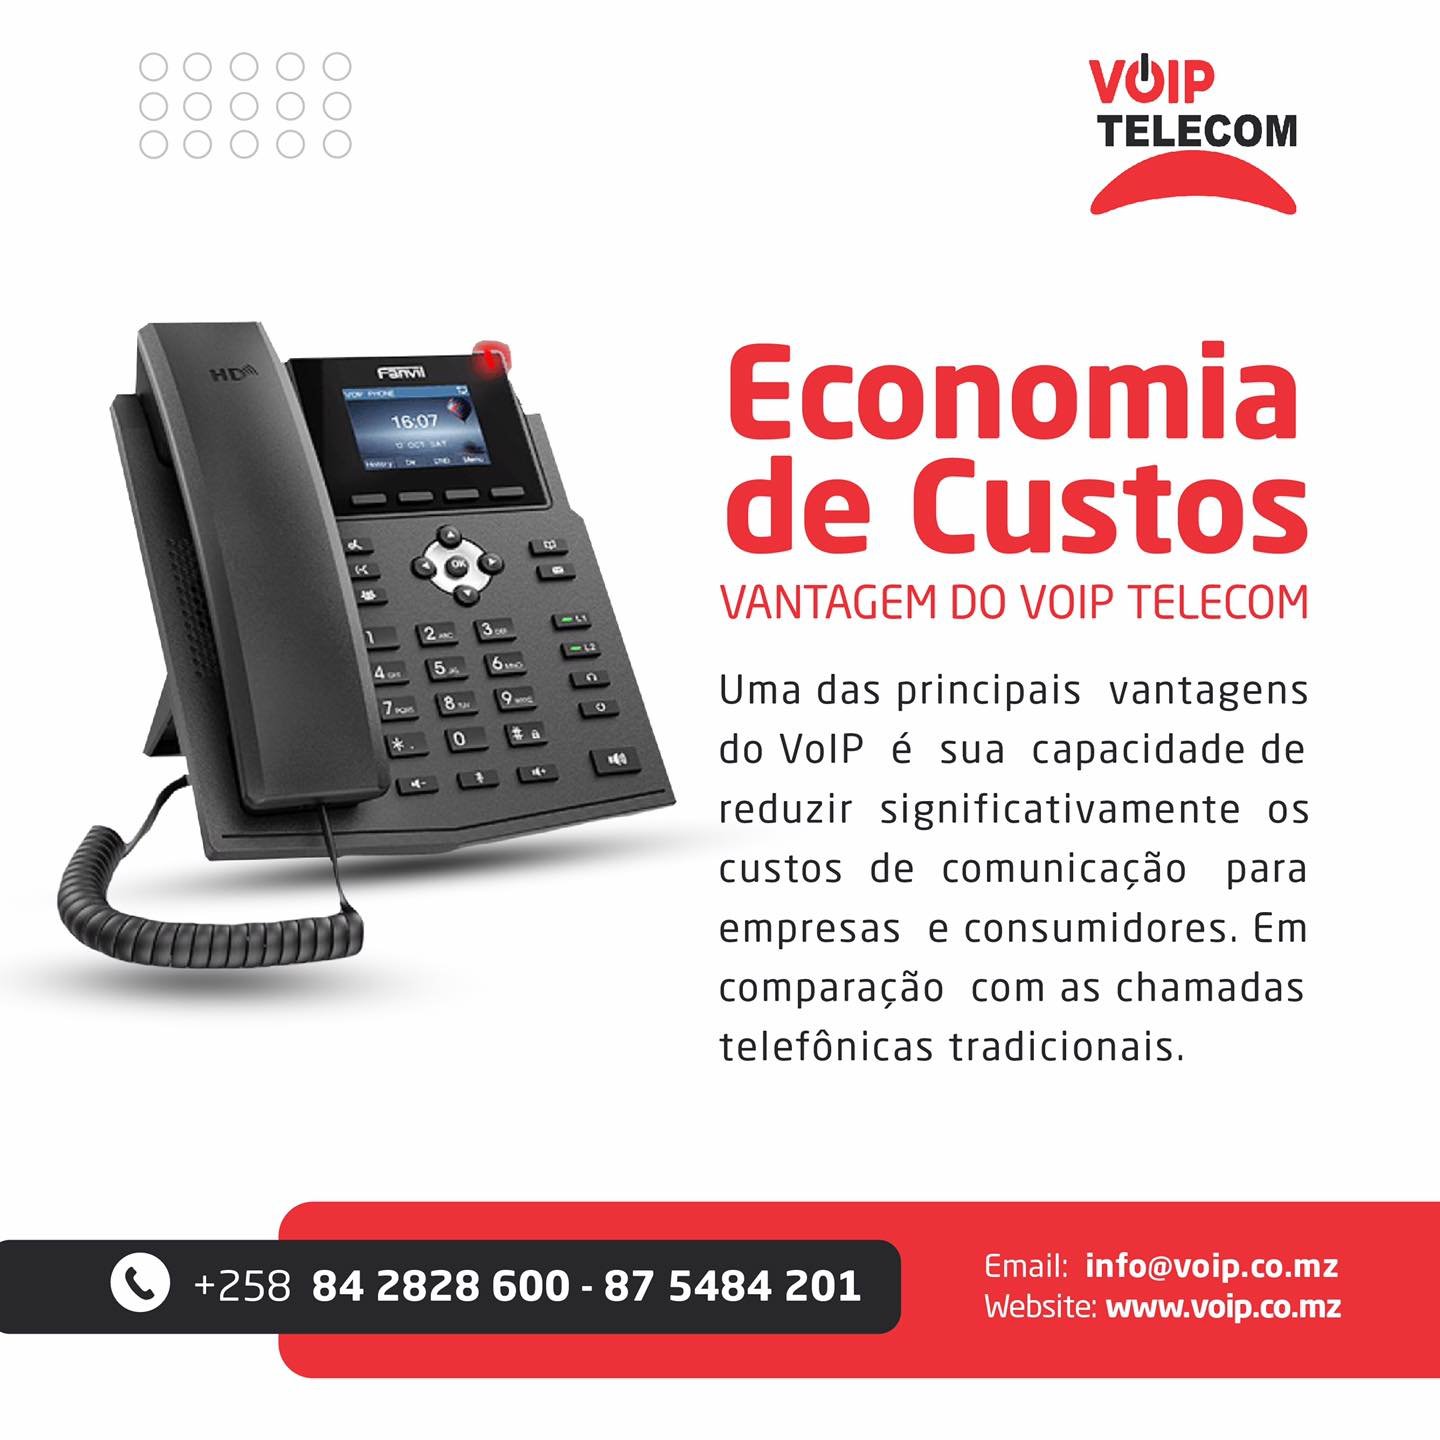 Voip Telecom, SA